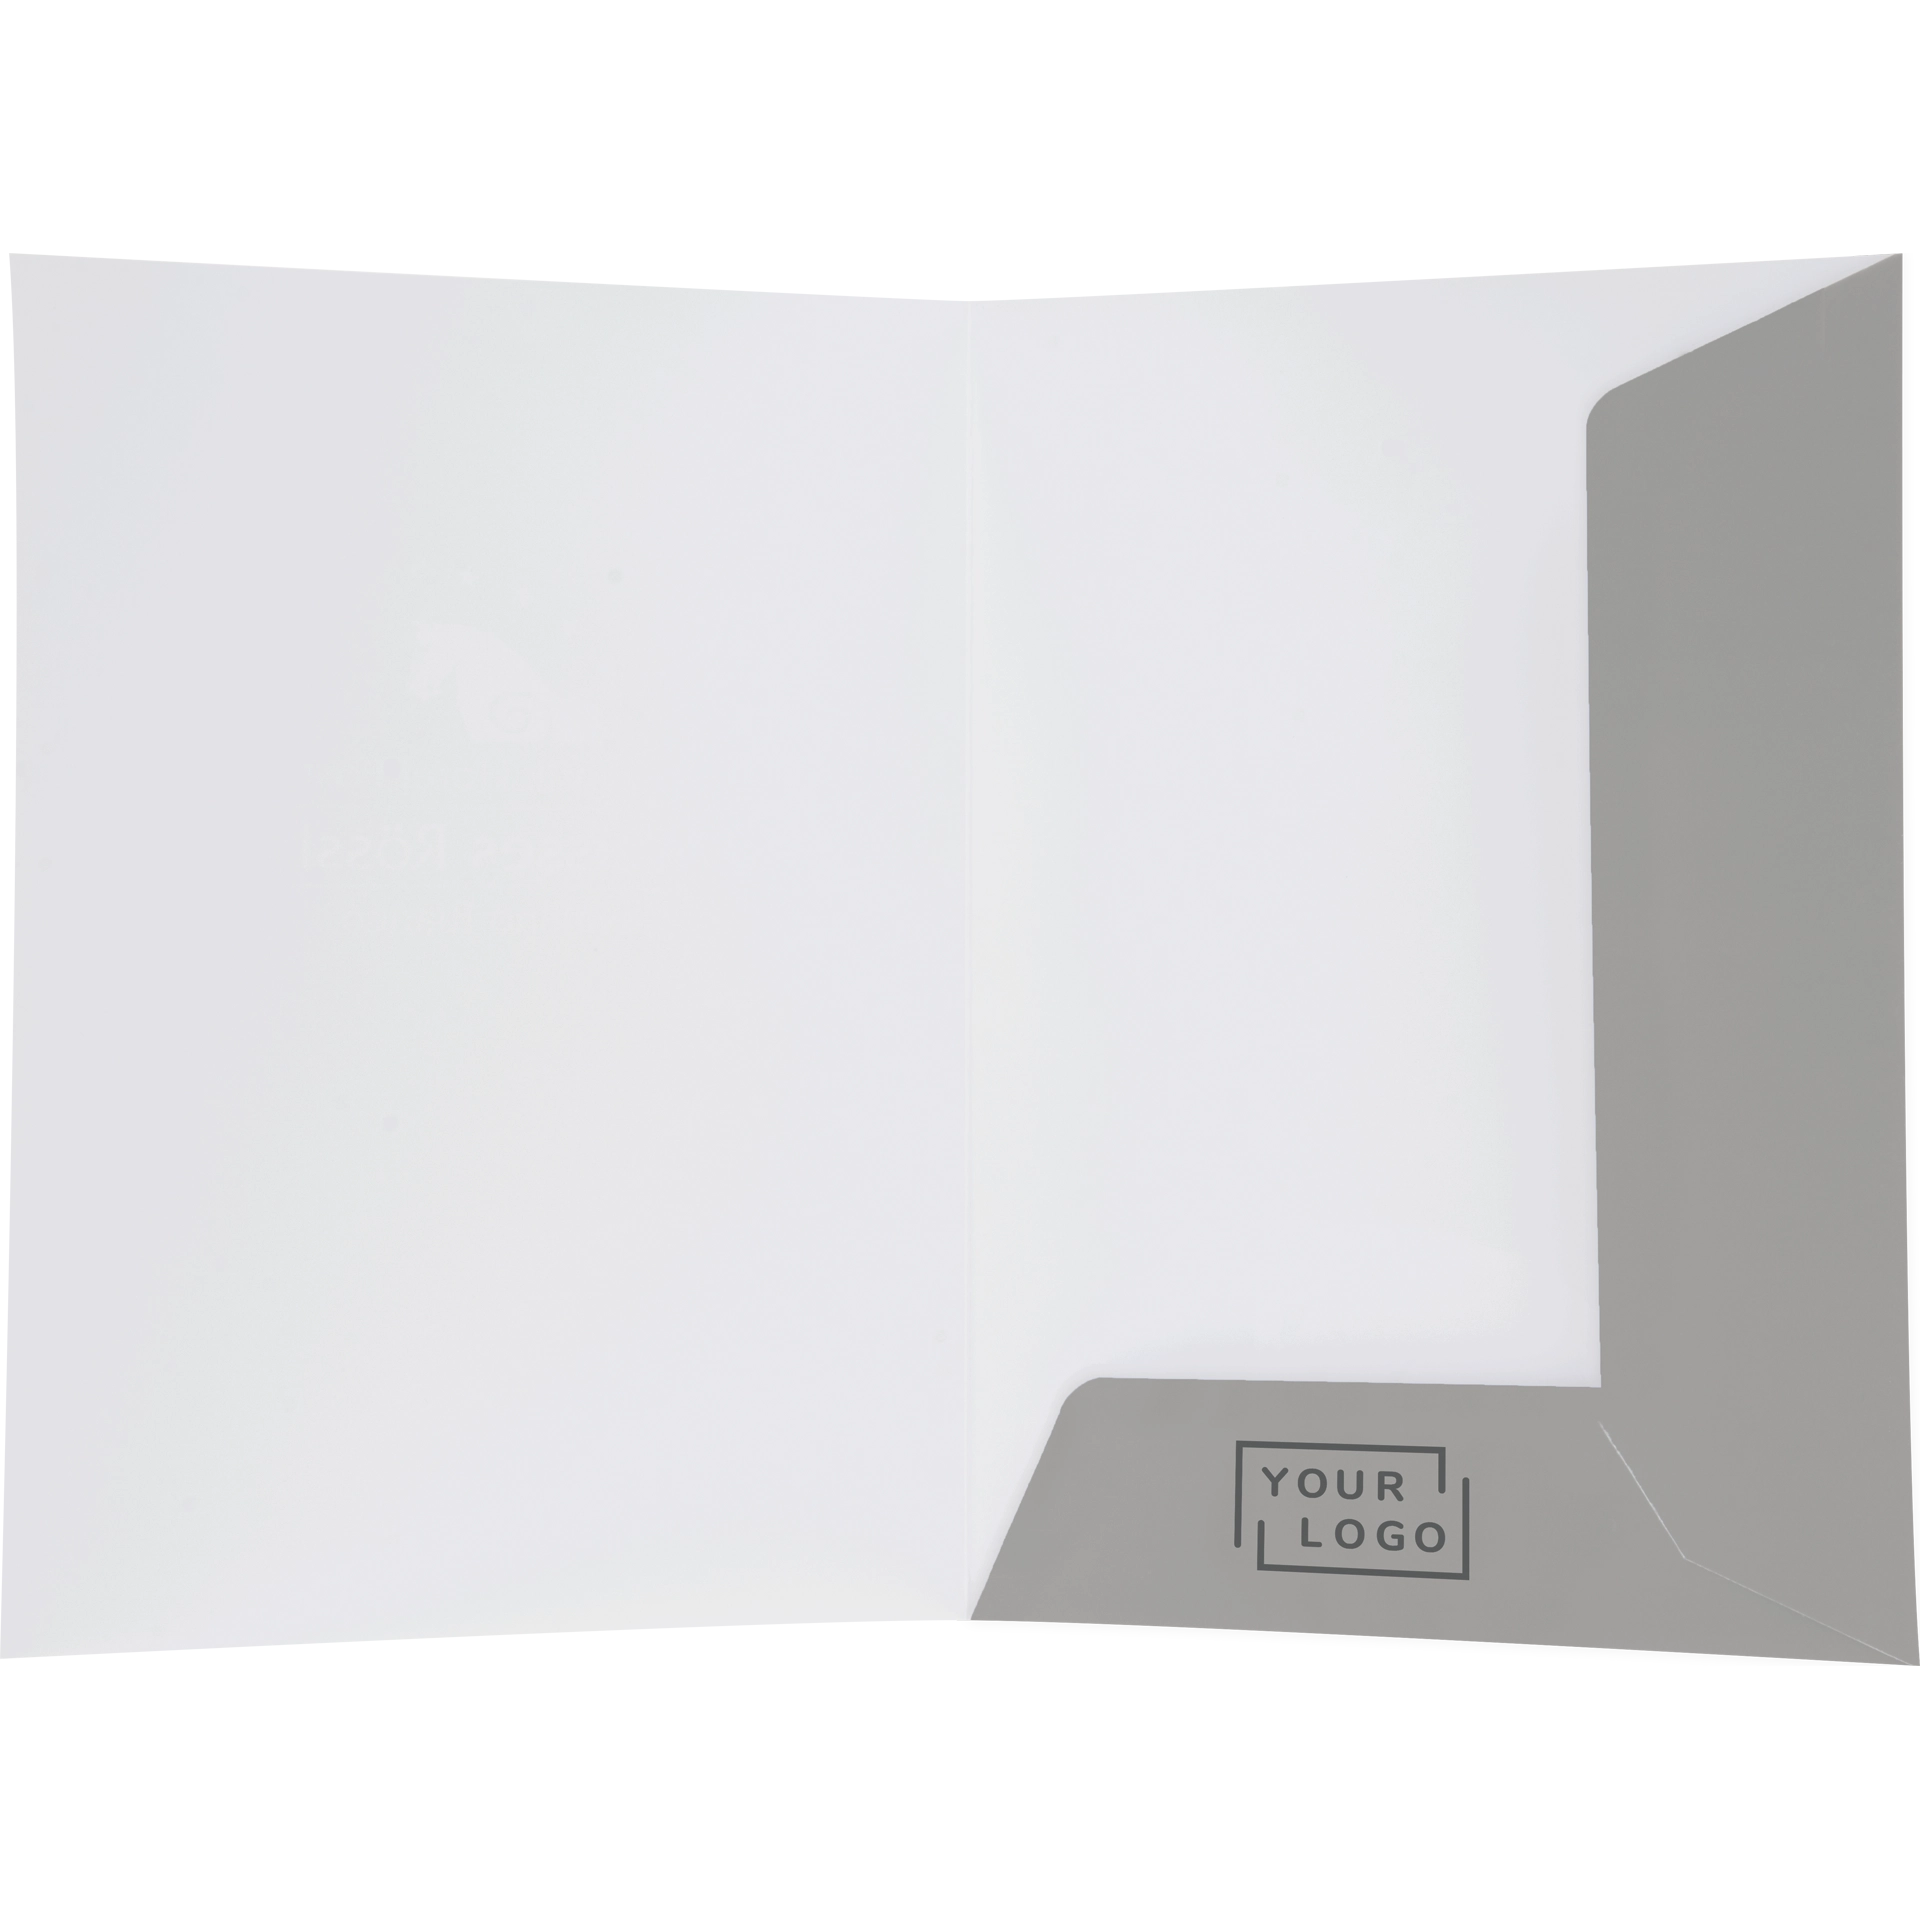 Hotelschreibmappe Karton A4 weiß 1 farbig bedruckt